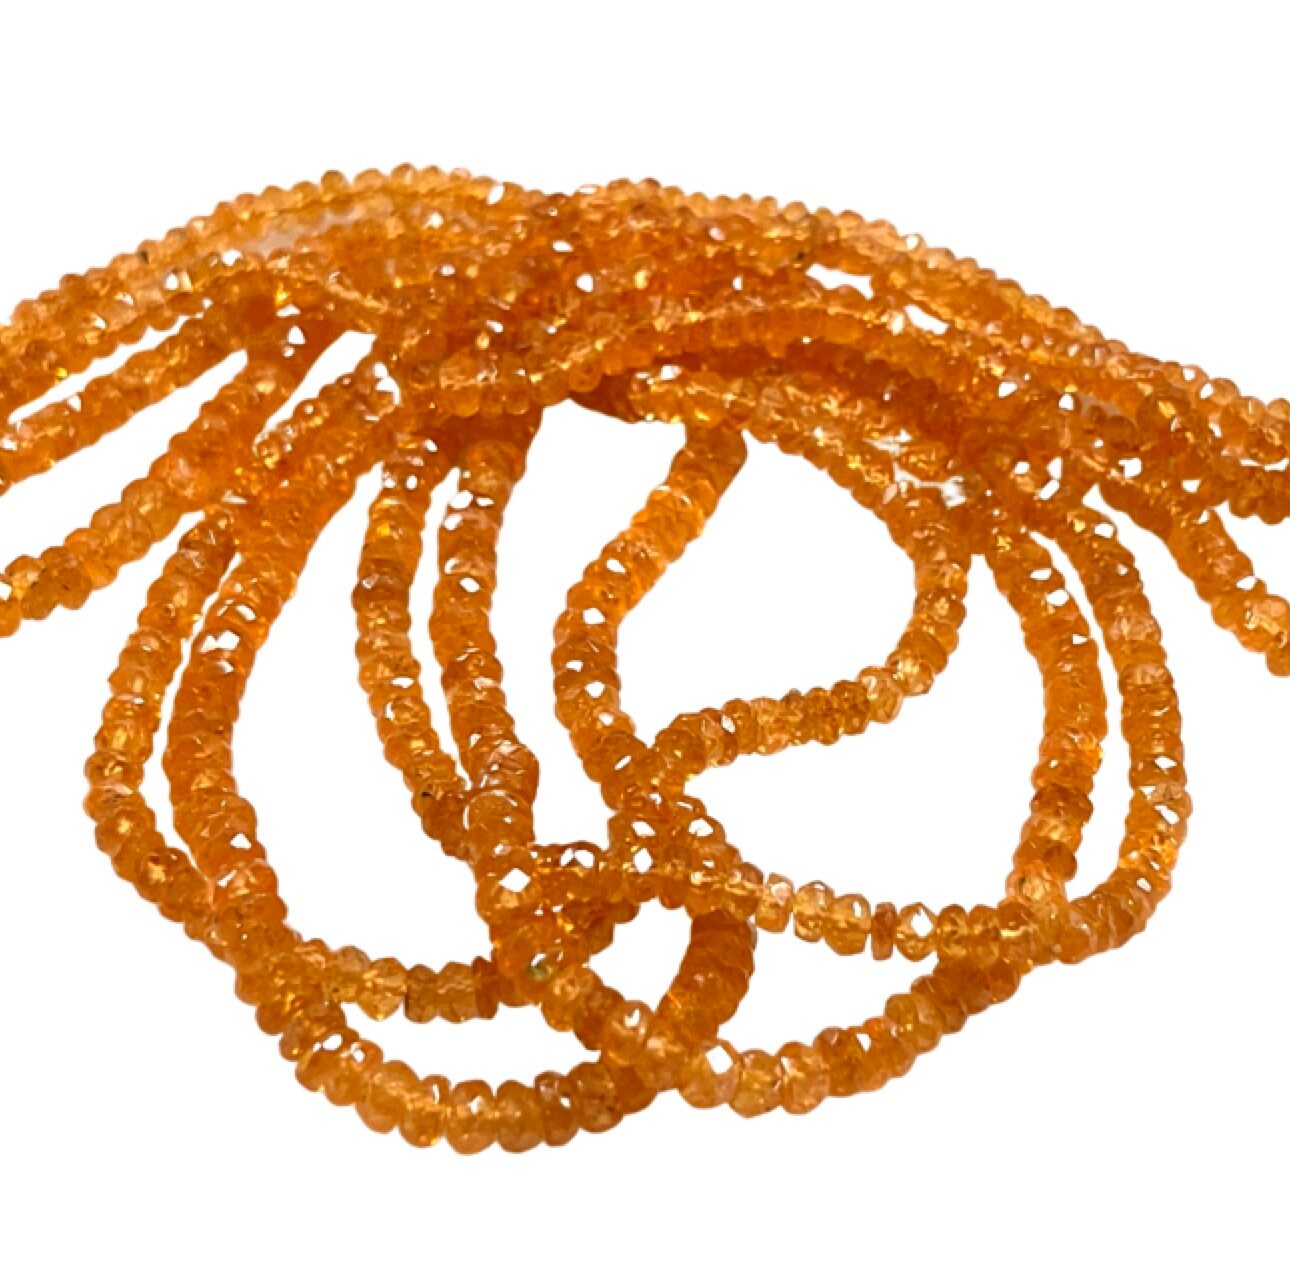 4mm AAA Spessartite Garnet Natural Gemstone Faceted Beads Strand, MandarinOrange Garnet Beads15-16 Inch Long Healing Energy Gemstone Beads